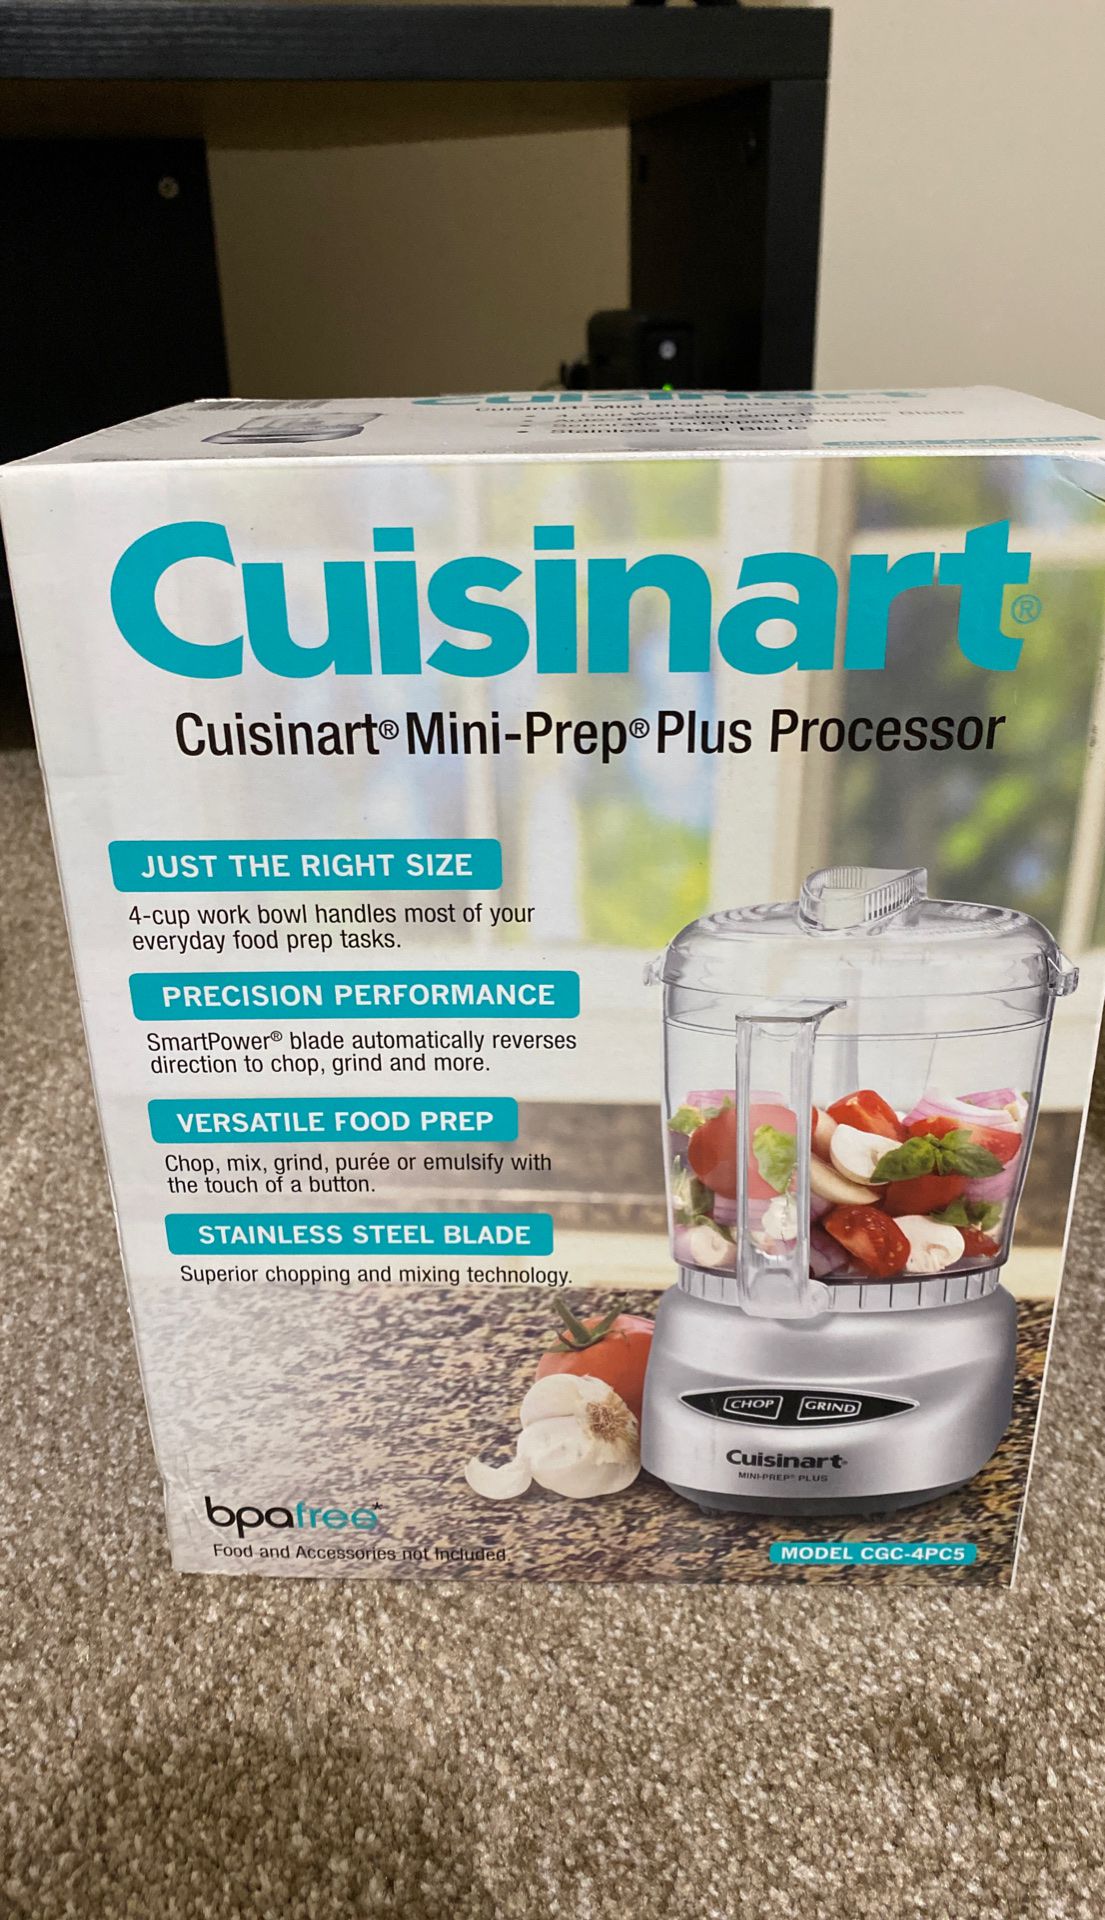 Brand new cuisinart food processor!